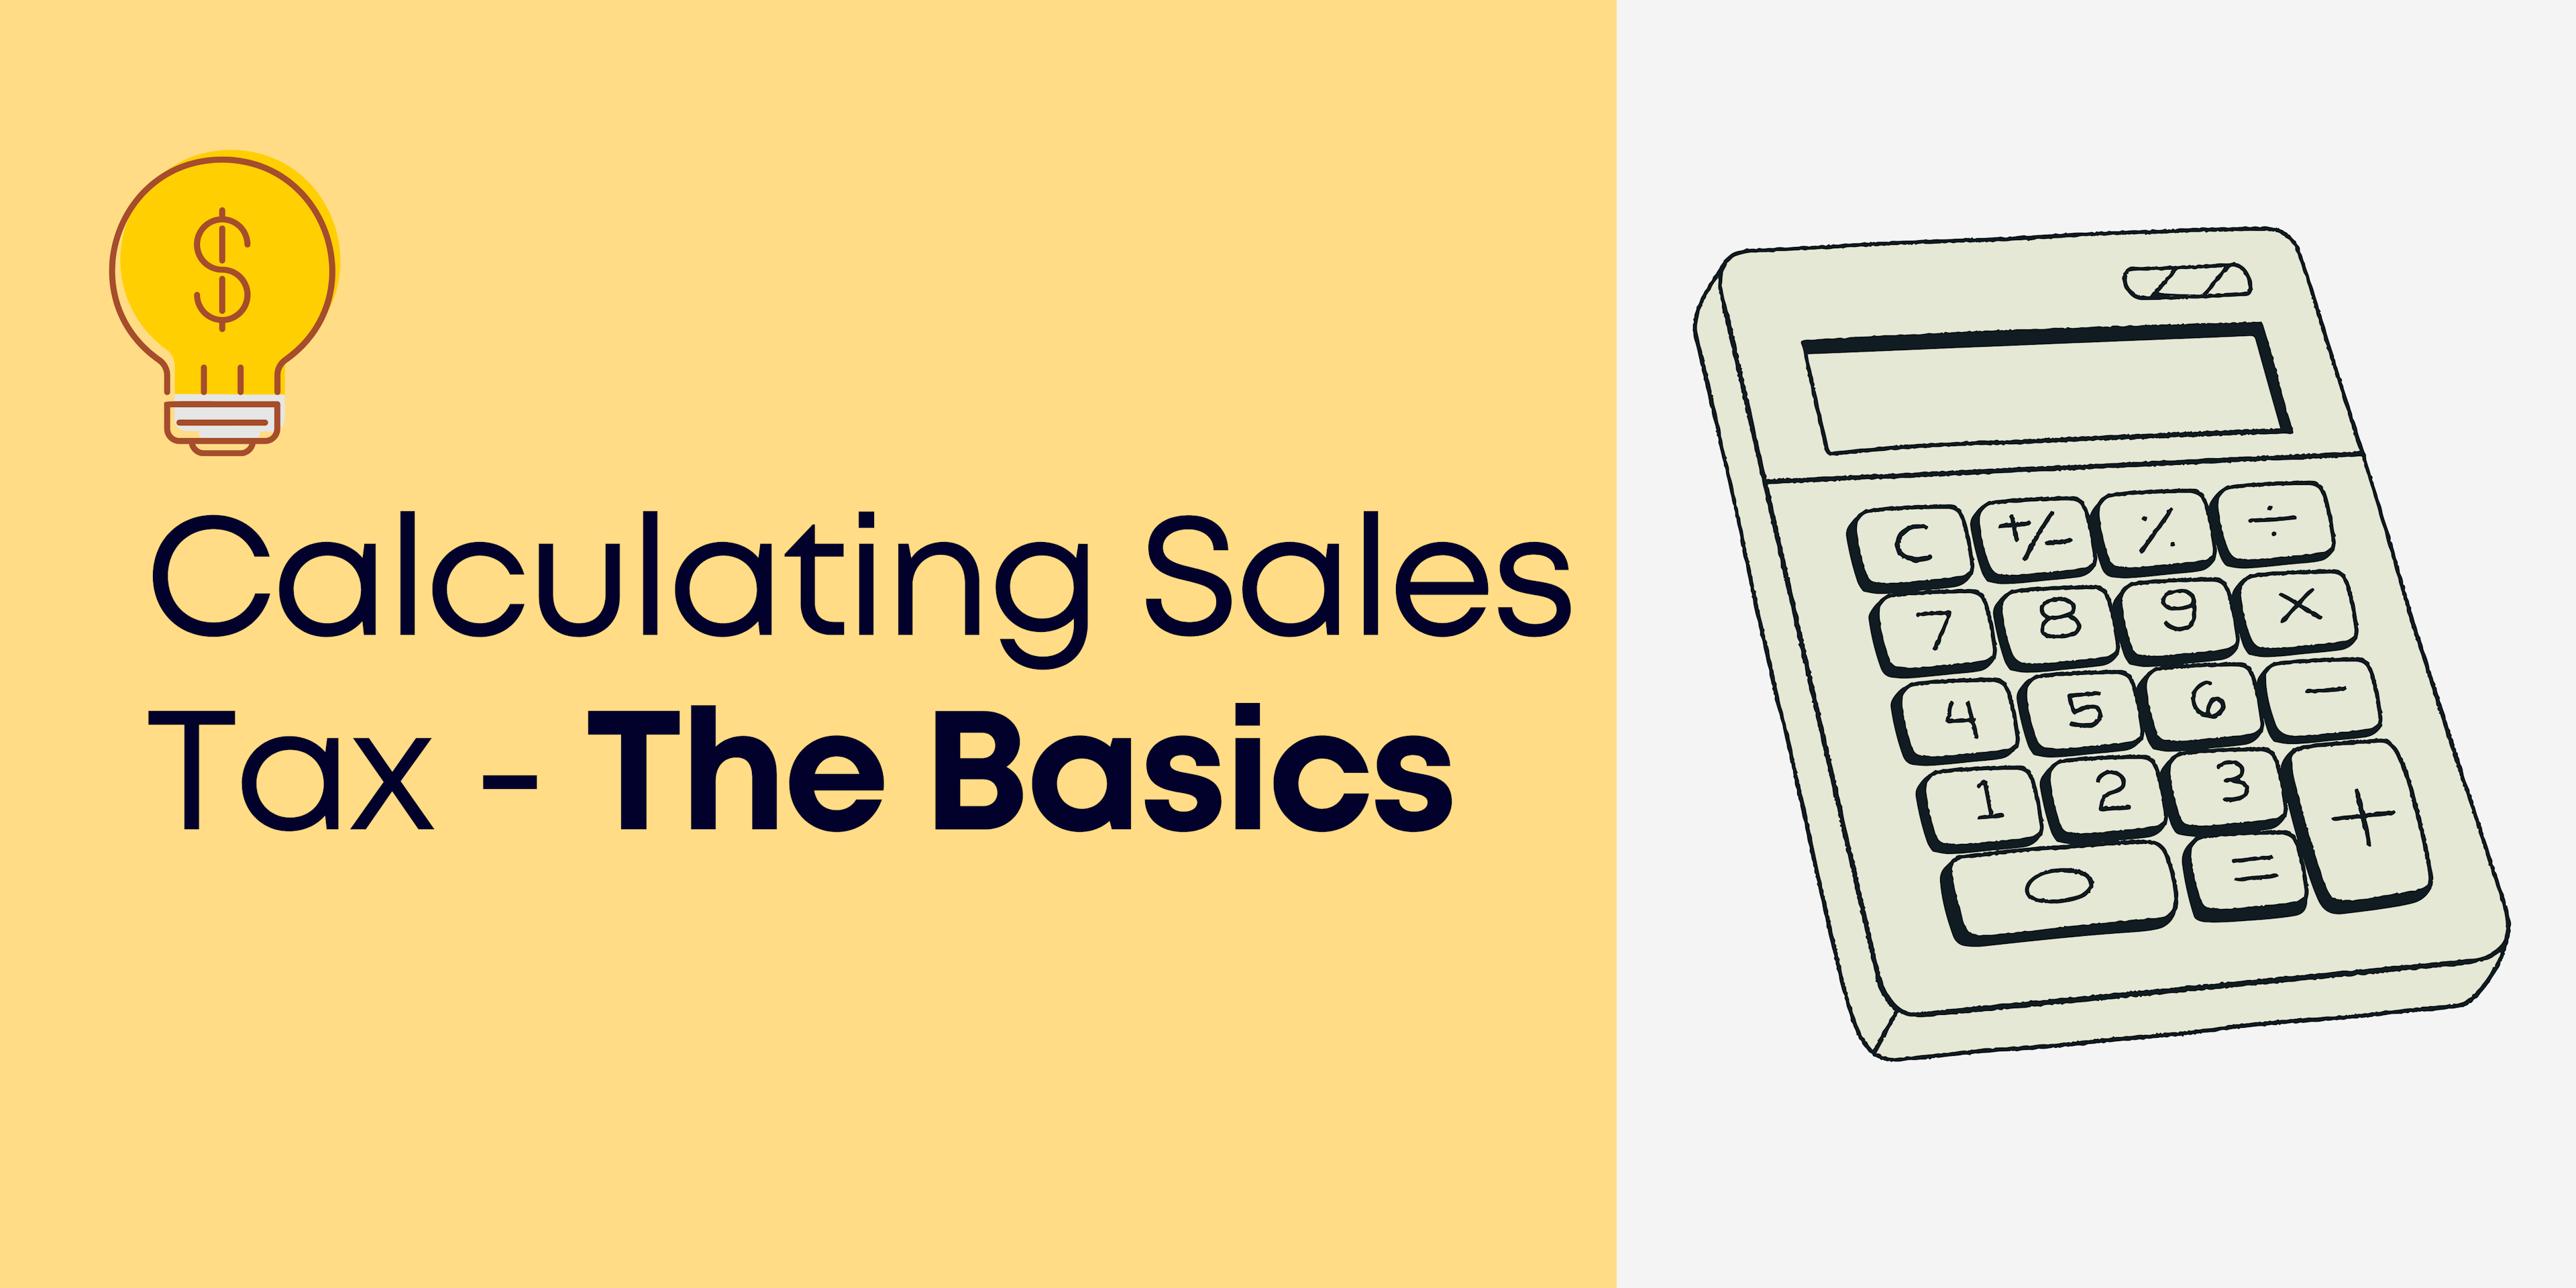 Calculating Sales Tax - The Basics